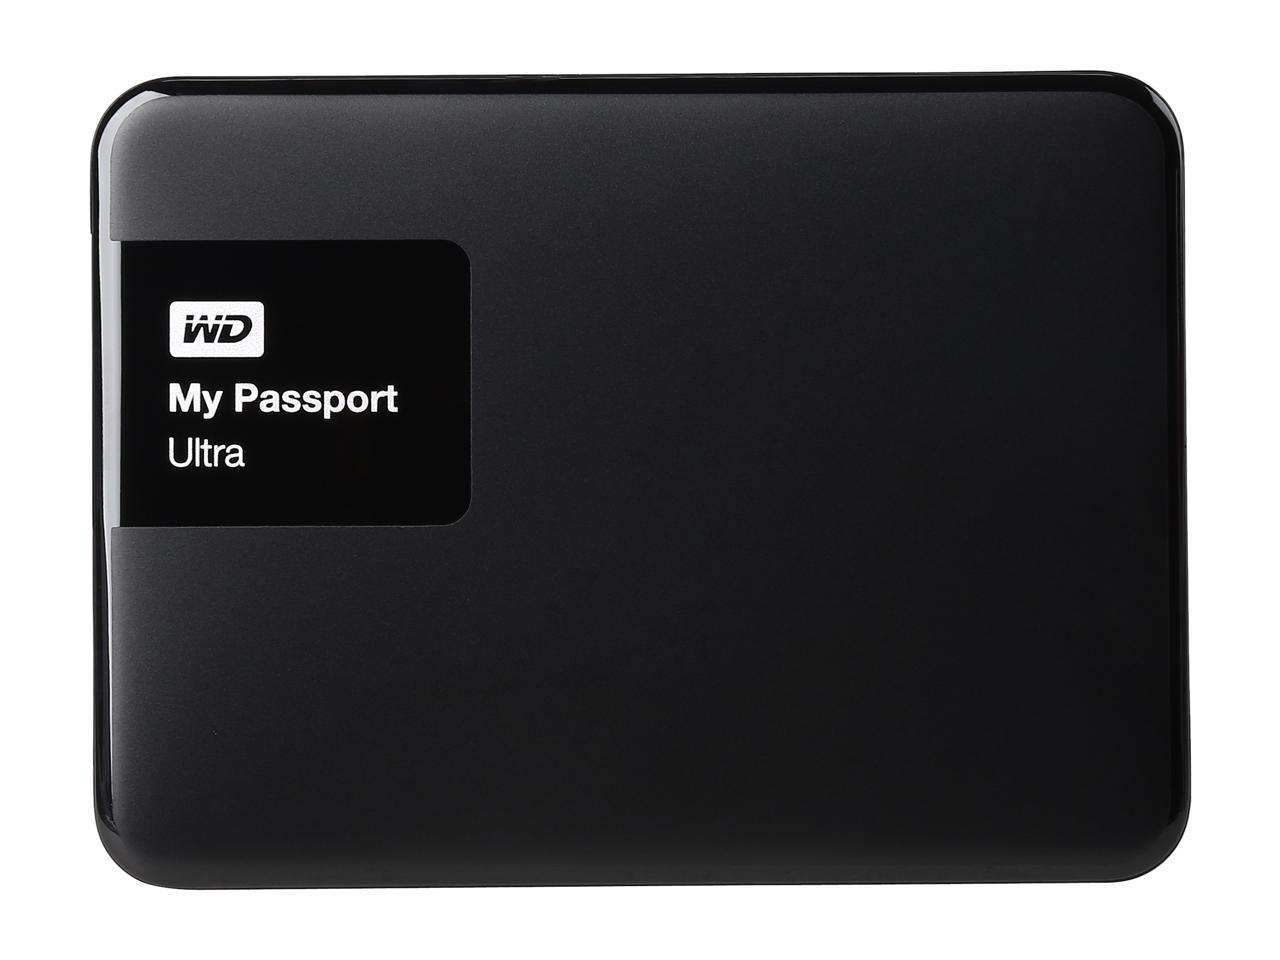 WD 500GB Black My Passport Ultra Portable External Hard Drive - USB 3.0 - WDBWWM5000ABK-NESN